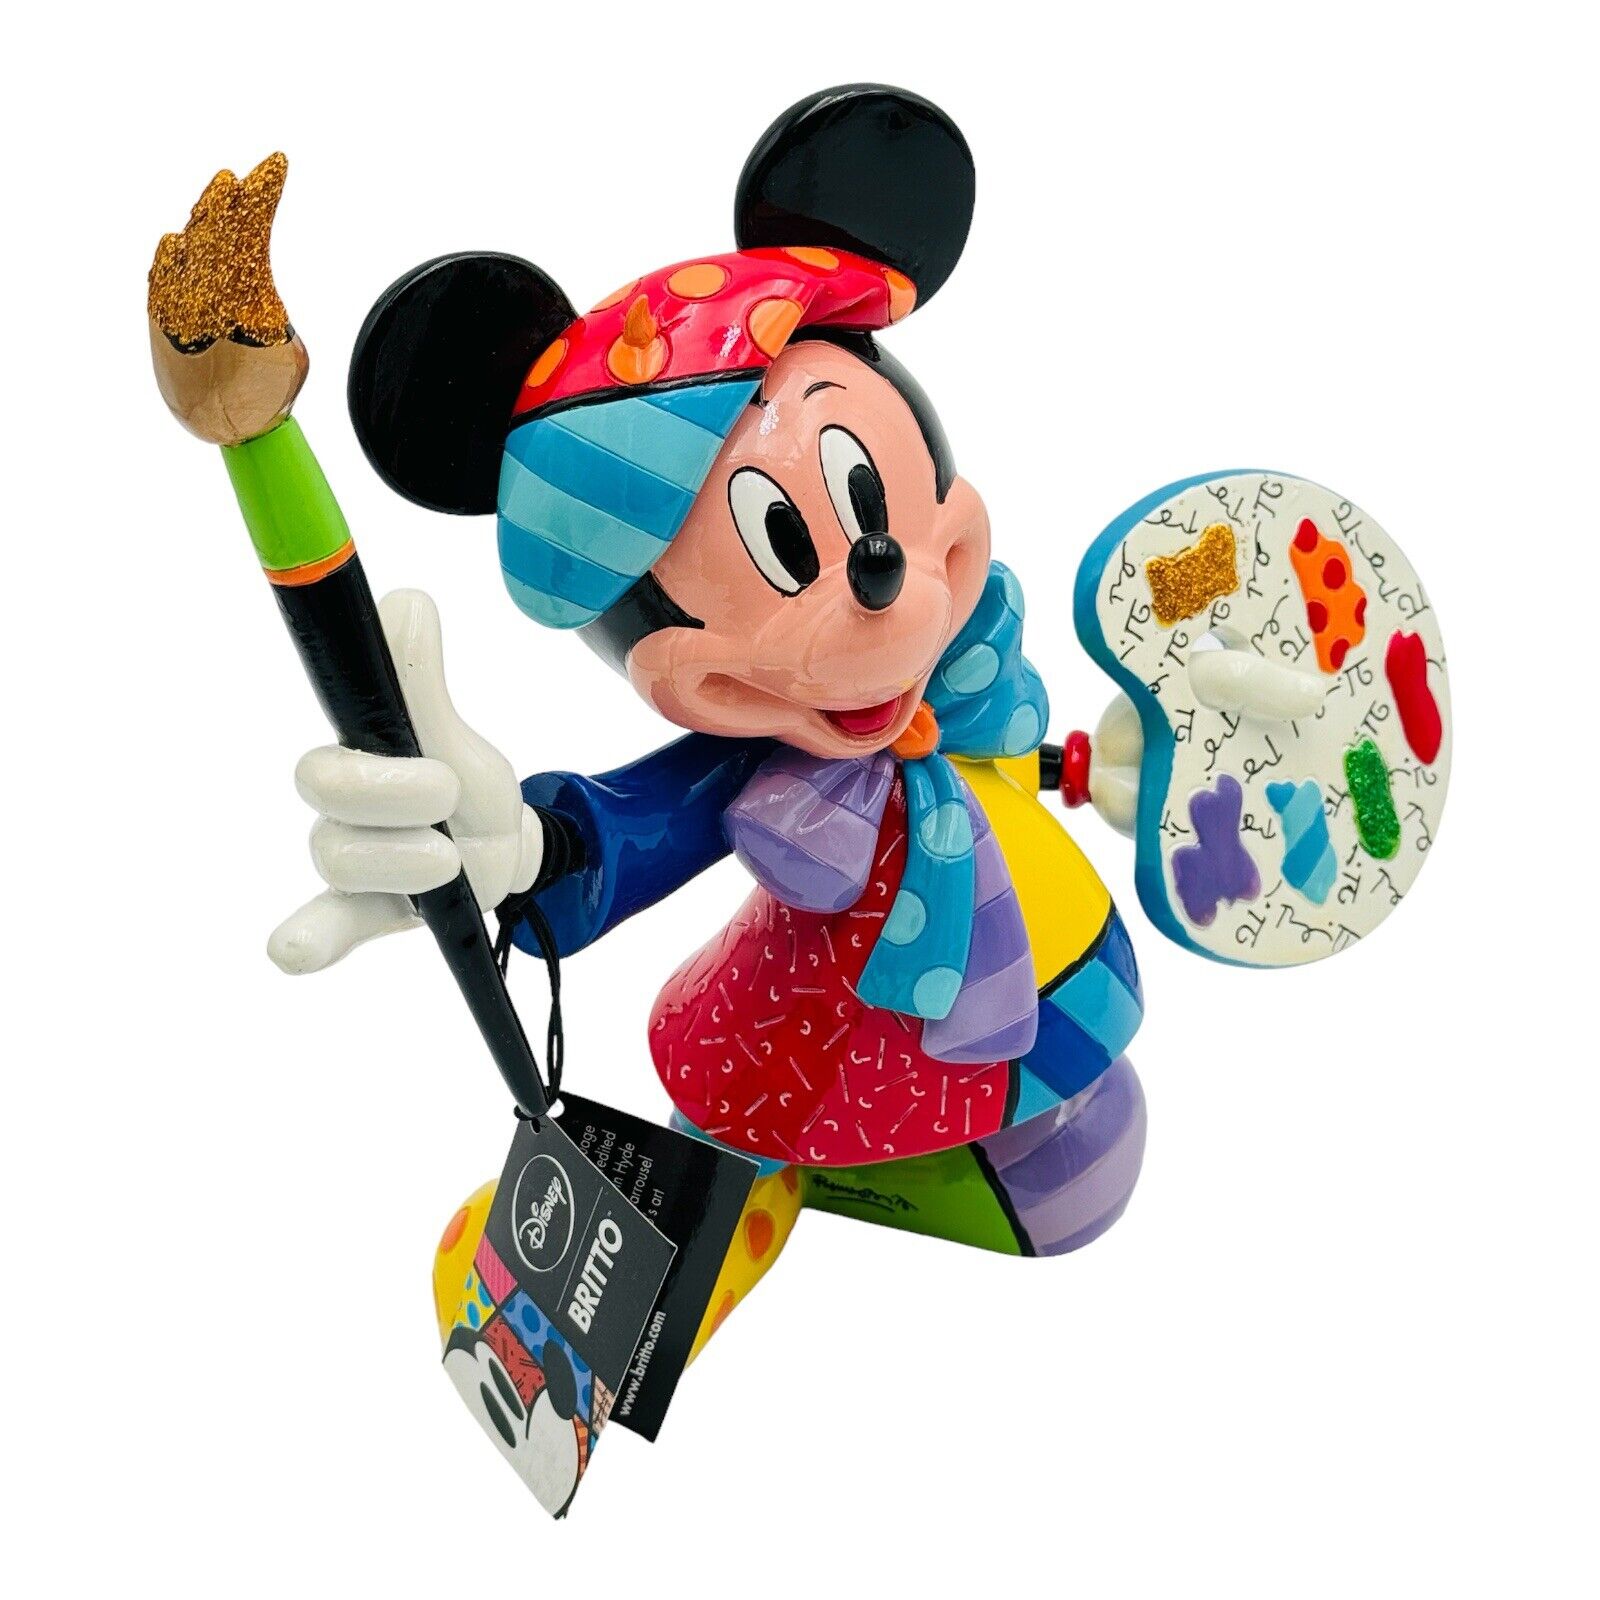 Enesco Disney By Romero Britto Artist Mickey Mouse Figurine 8.5” Tall NEW W/ TAG